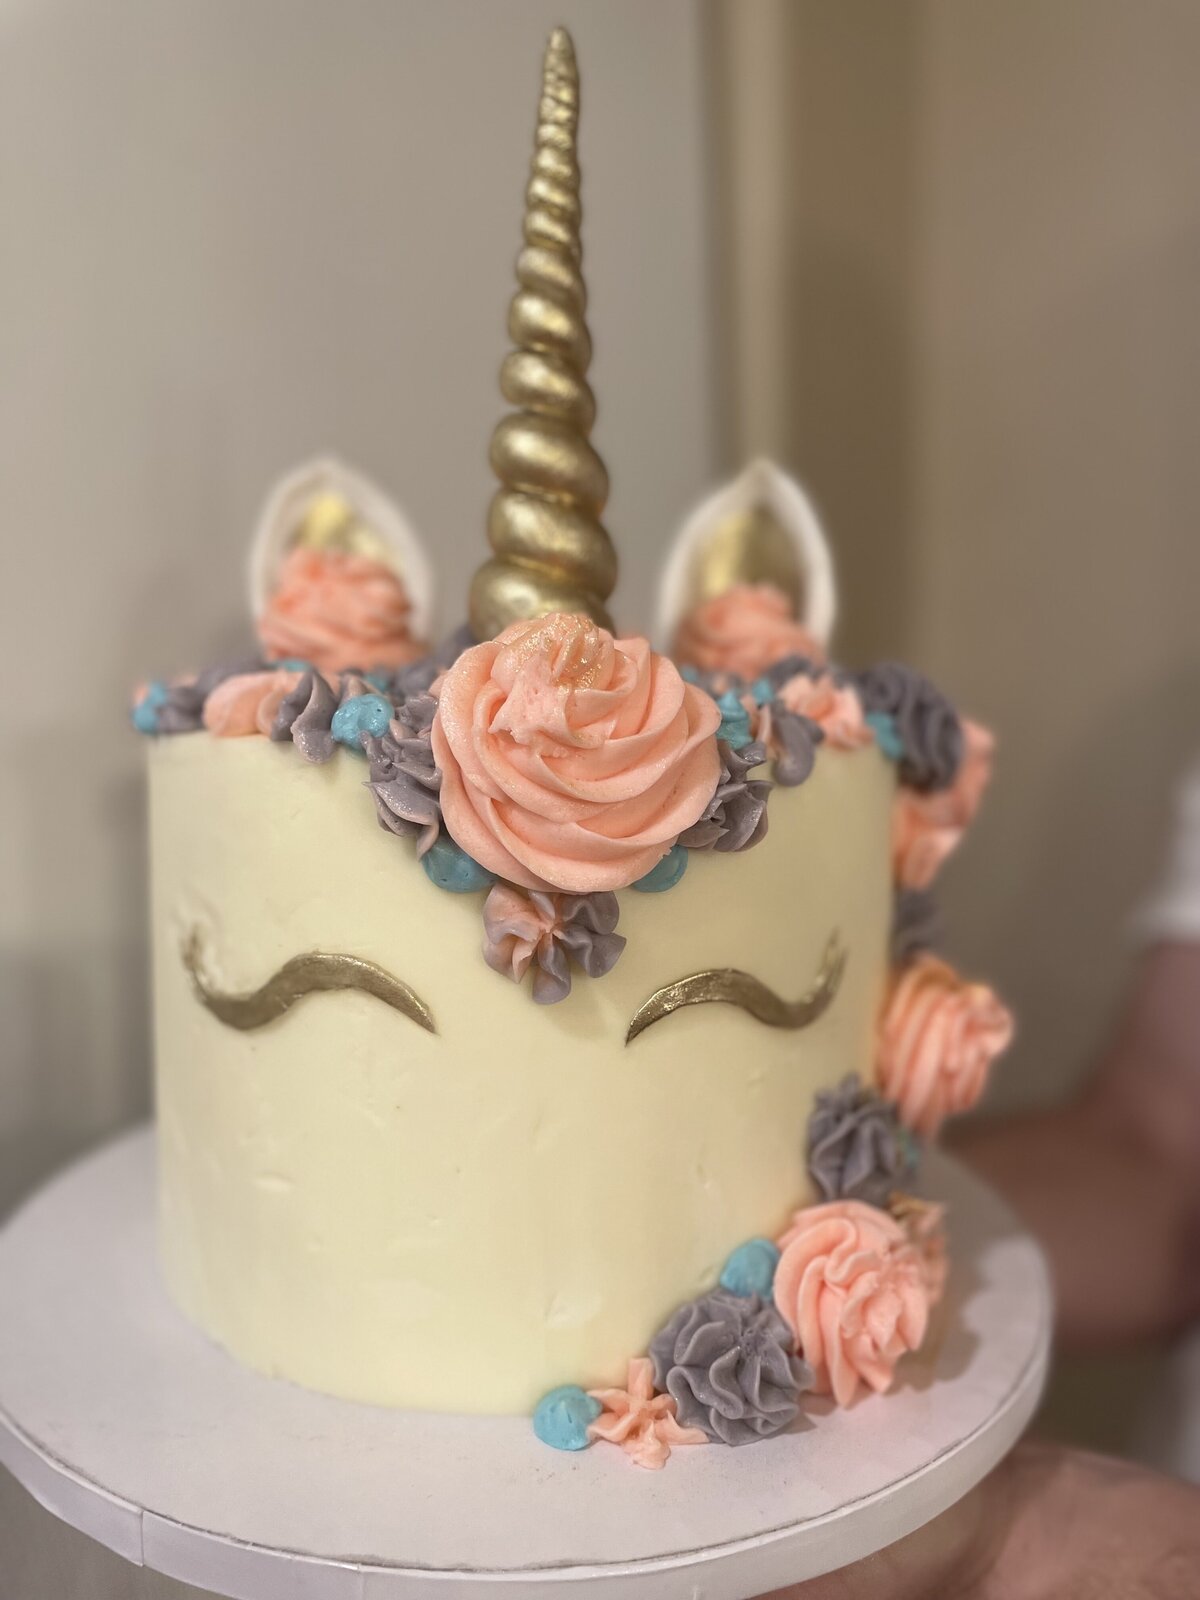 Elegant unicorn birthday cake decorated with flowers, created in Gilbert, AZ.